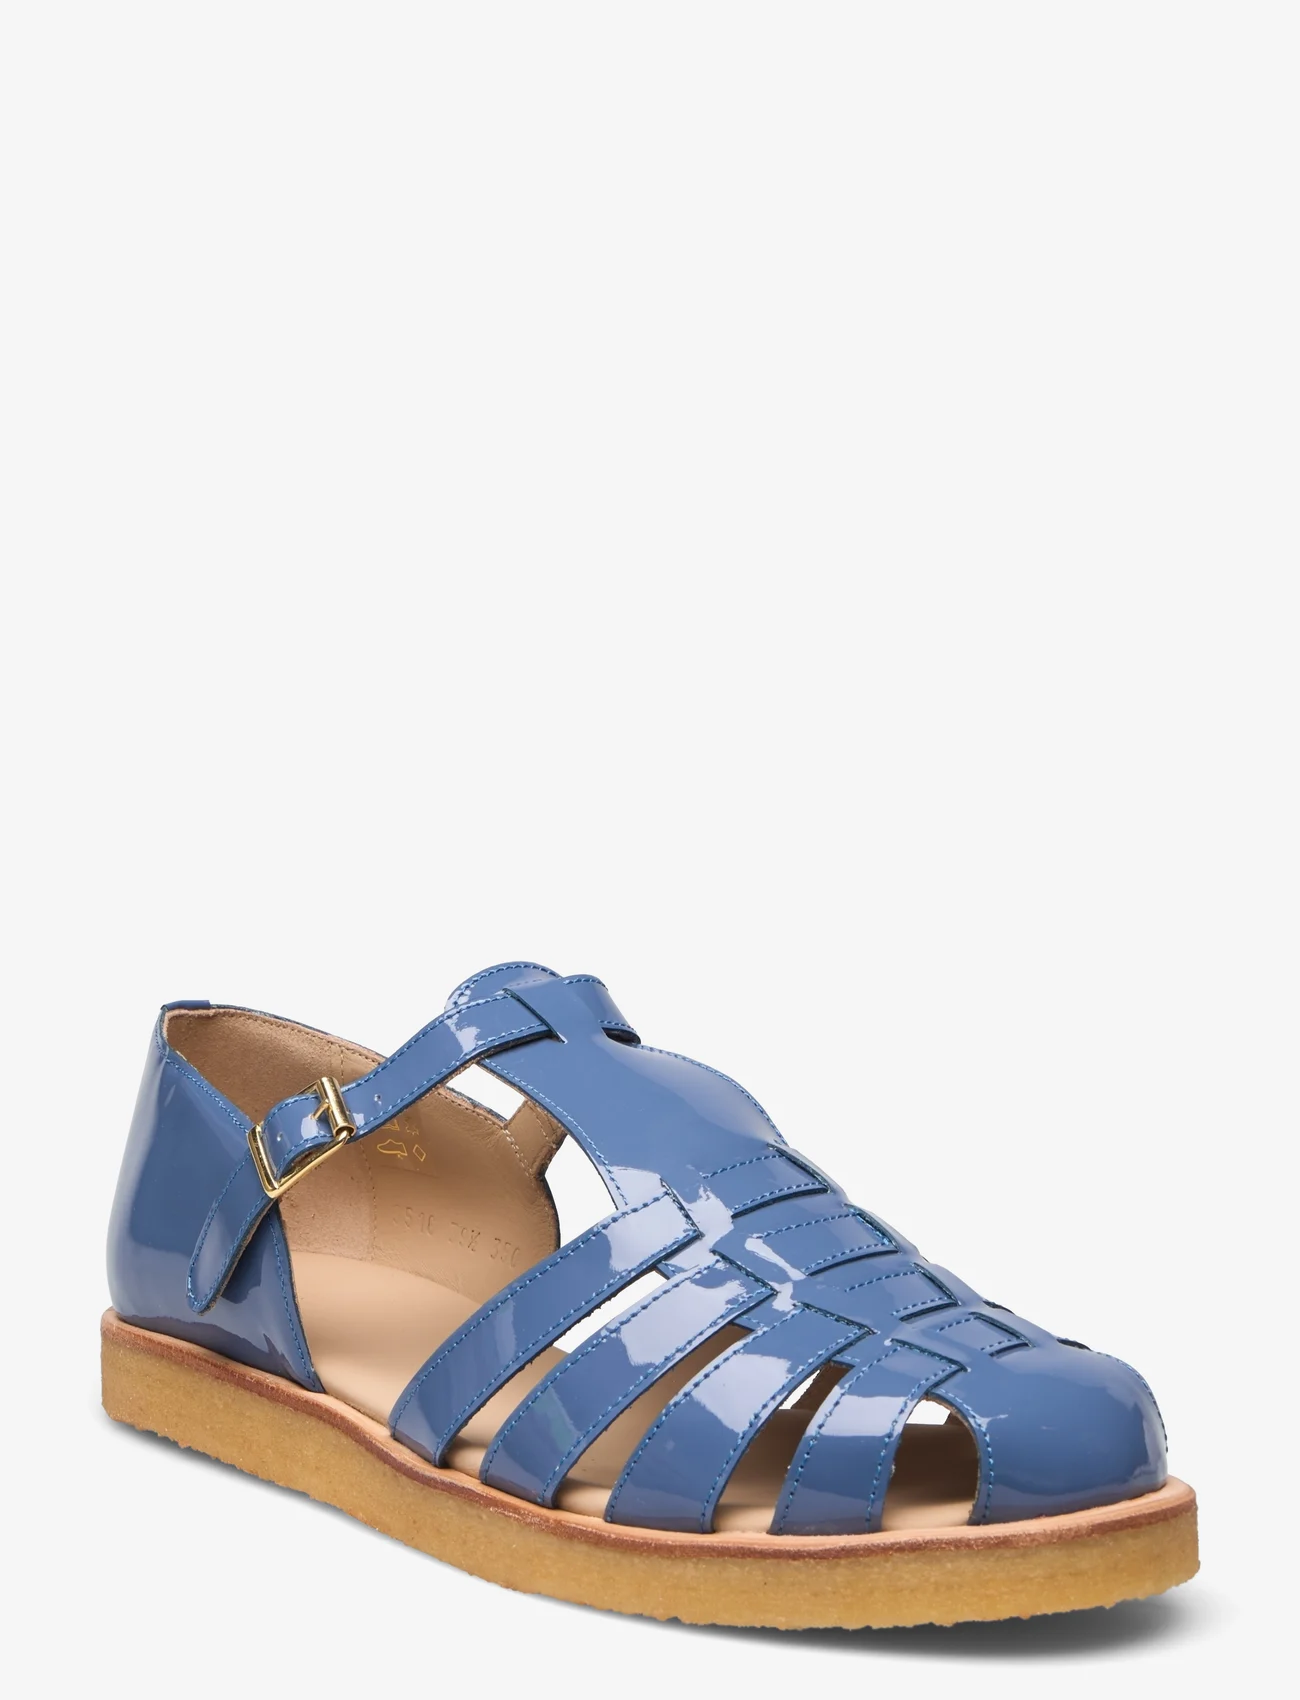 ANGULUS - Sandals - flat - closed toe - op - płaskie sandały - 2806 dusty blue - 1